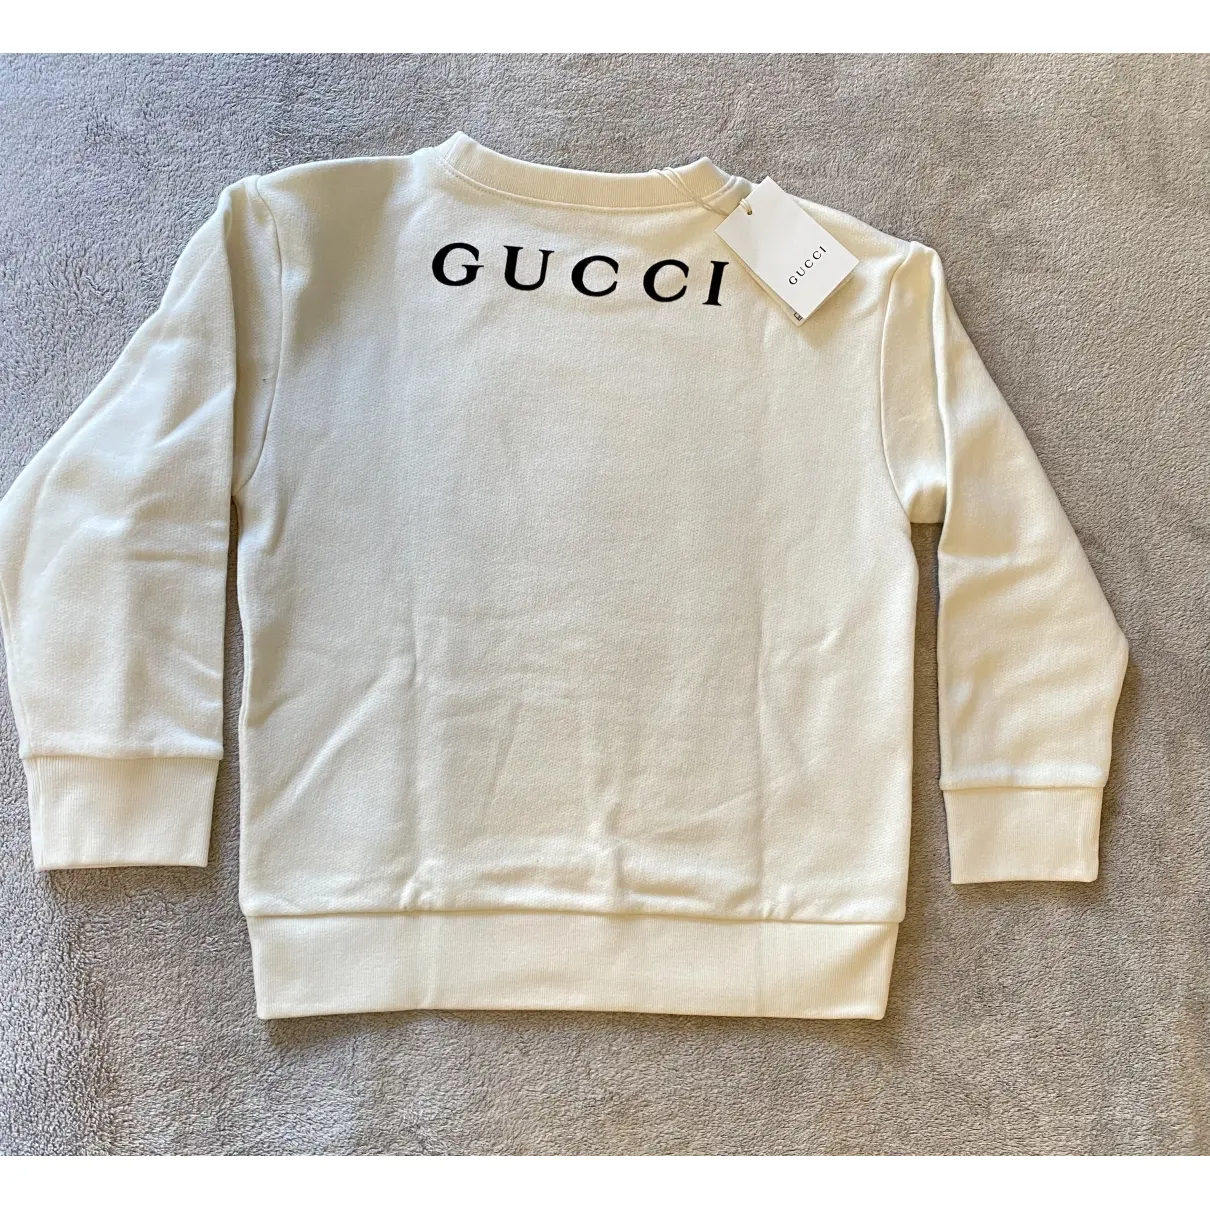 Buy Gucci Ecru Cotton Knitwear online